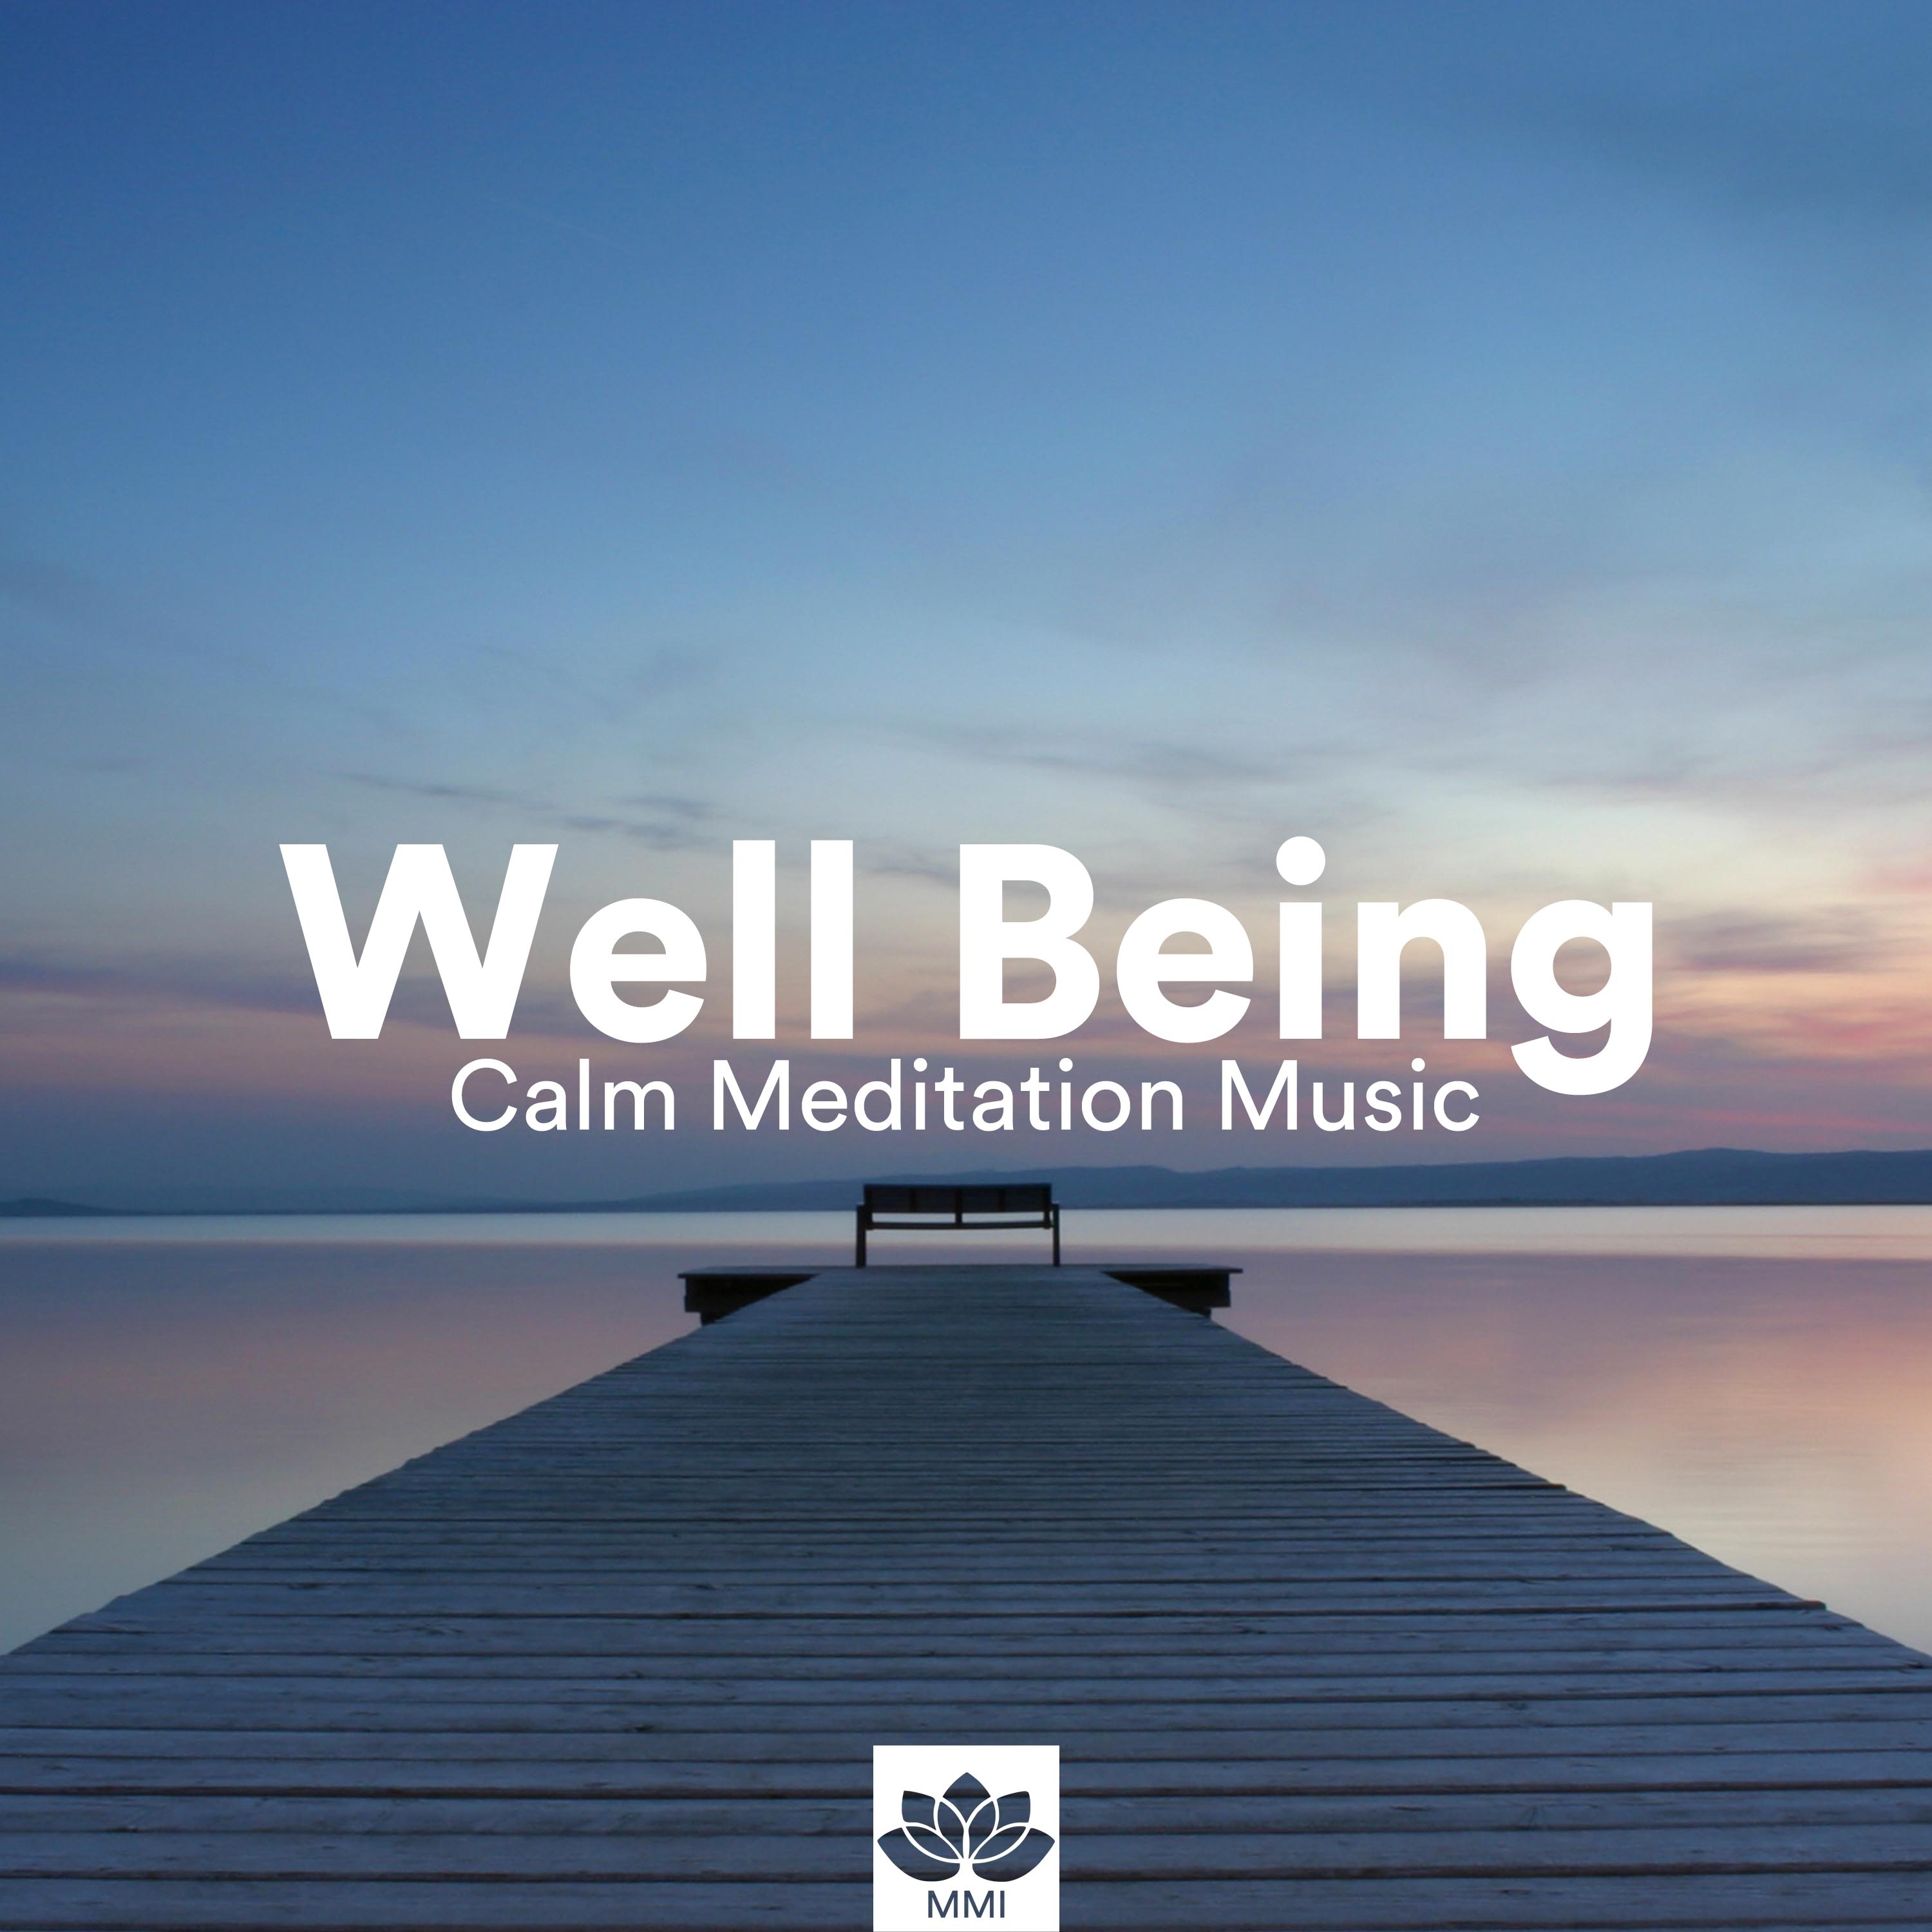 Well Being - Calm Meditation Music